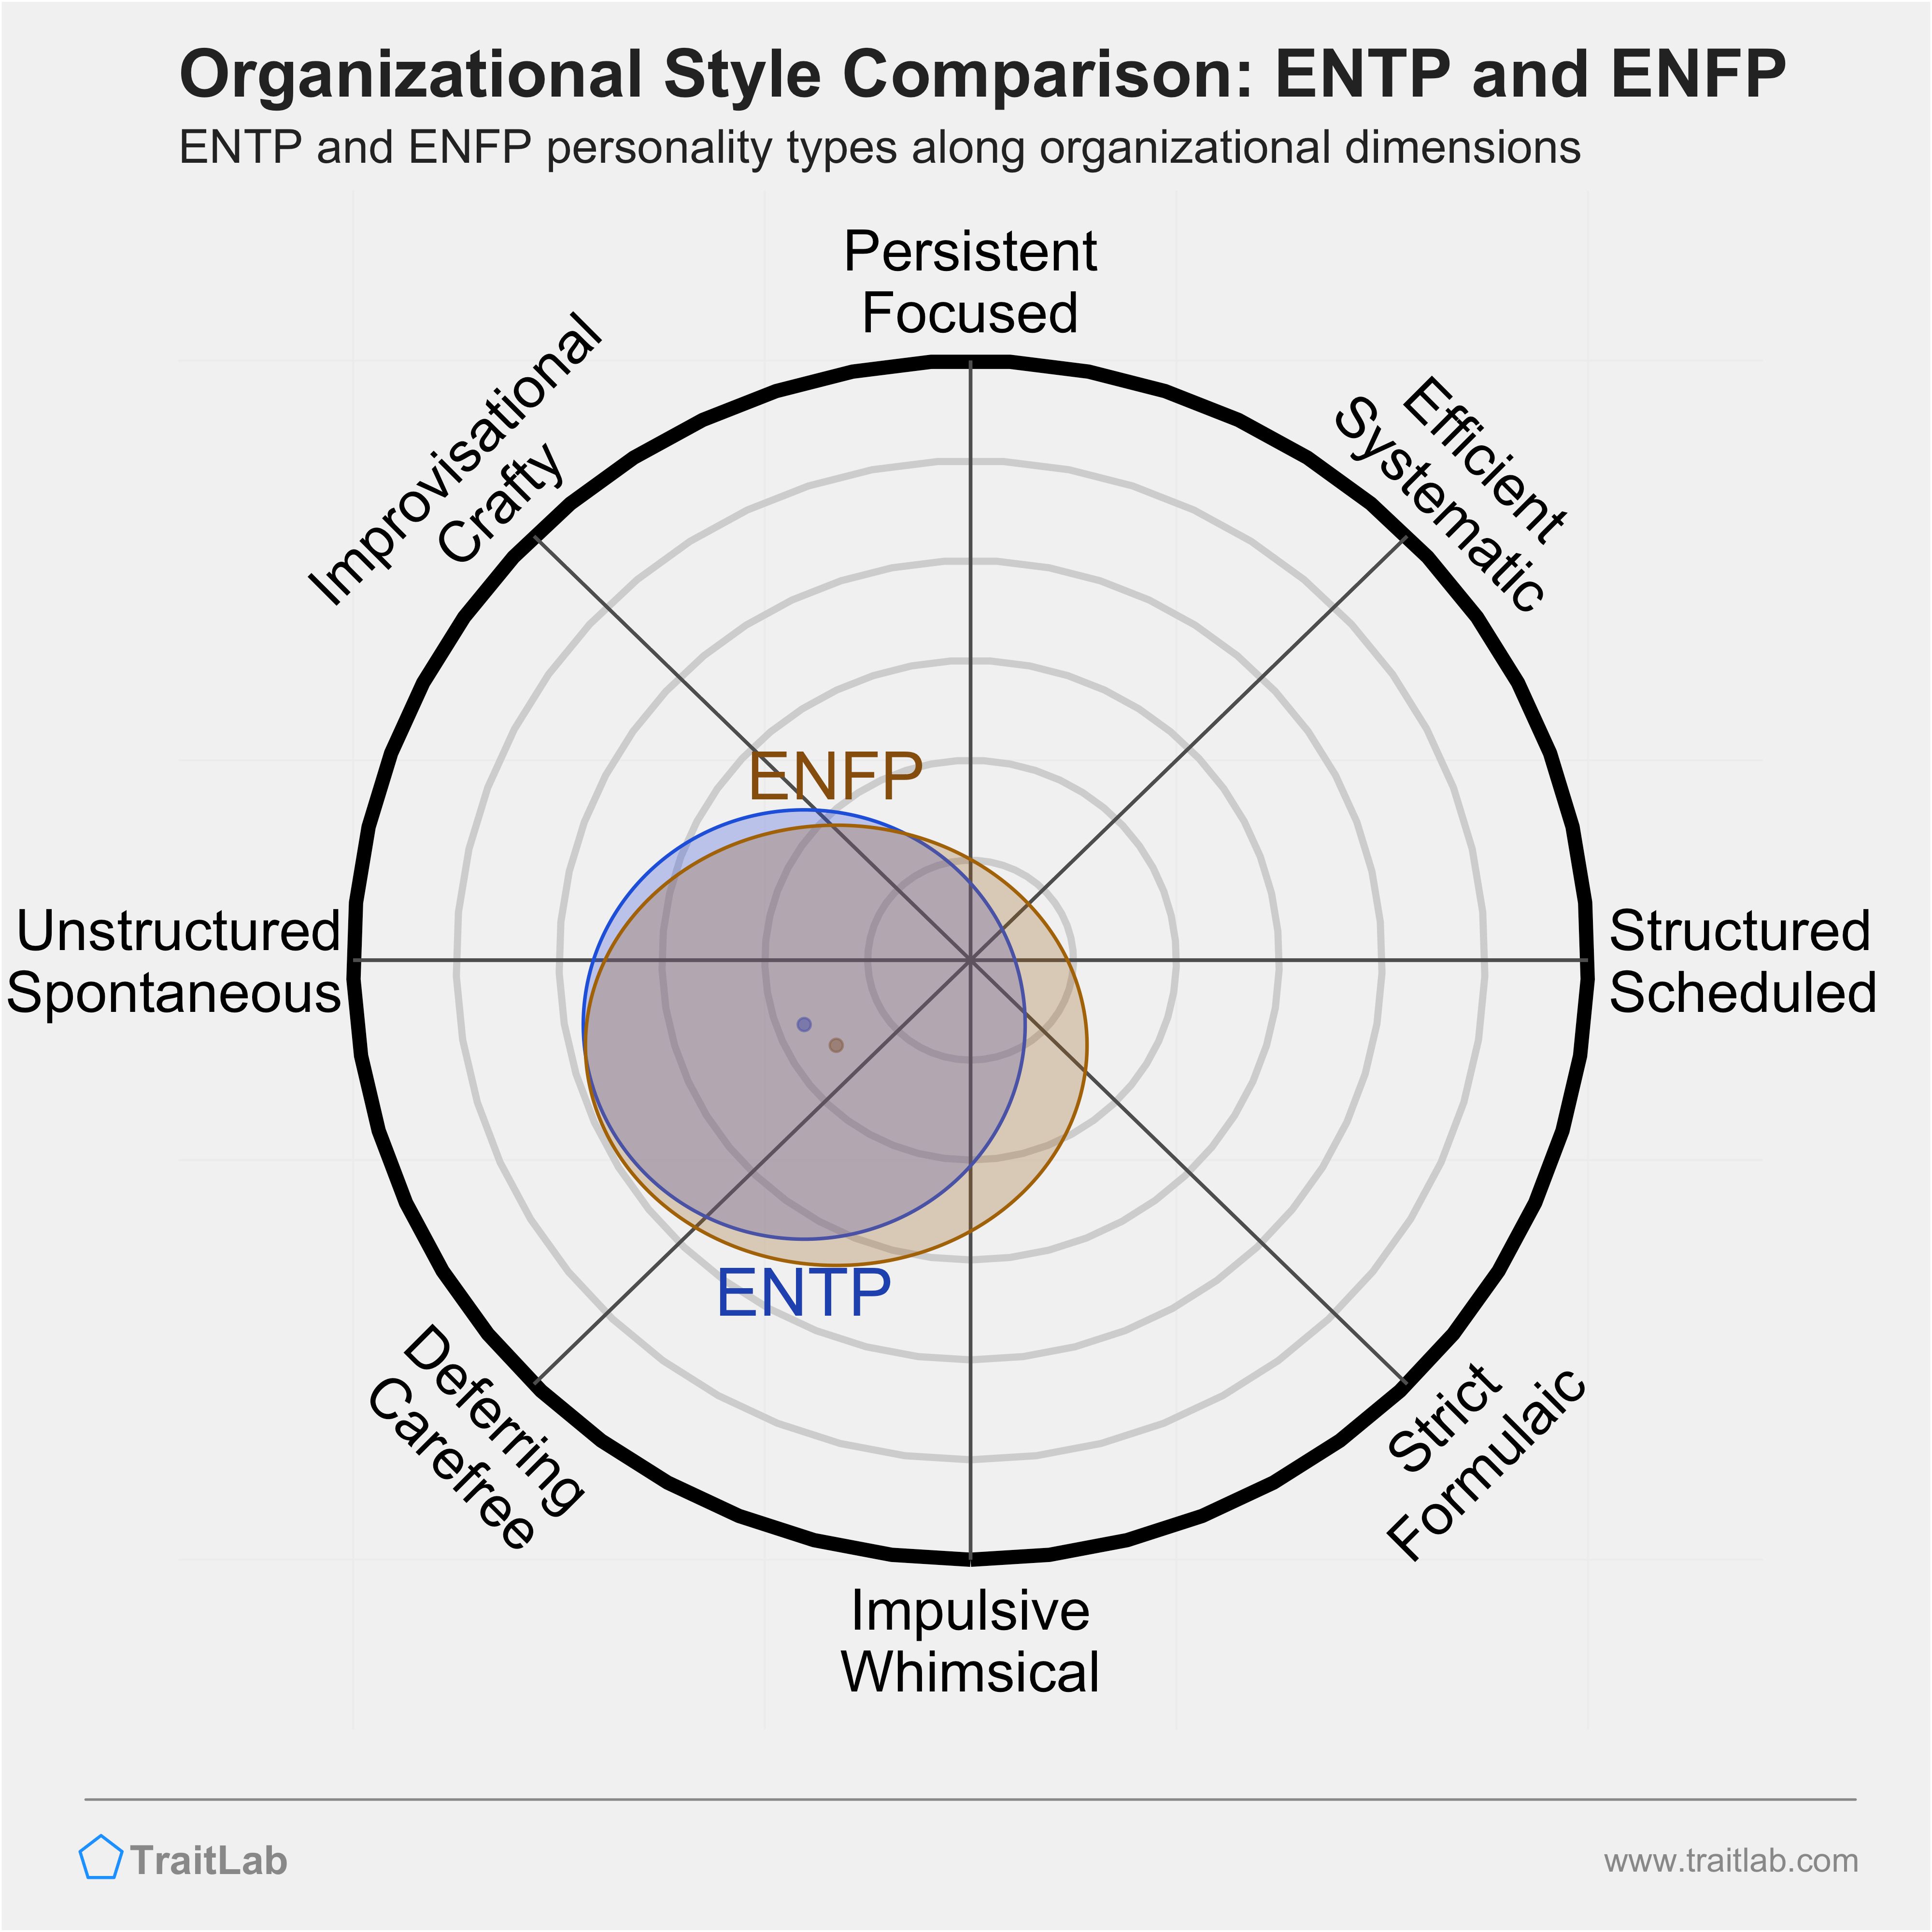 ENTP and ENFP comparison across organizational dimensions